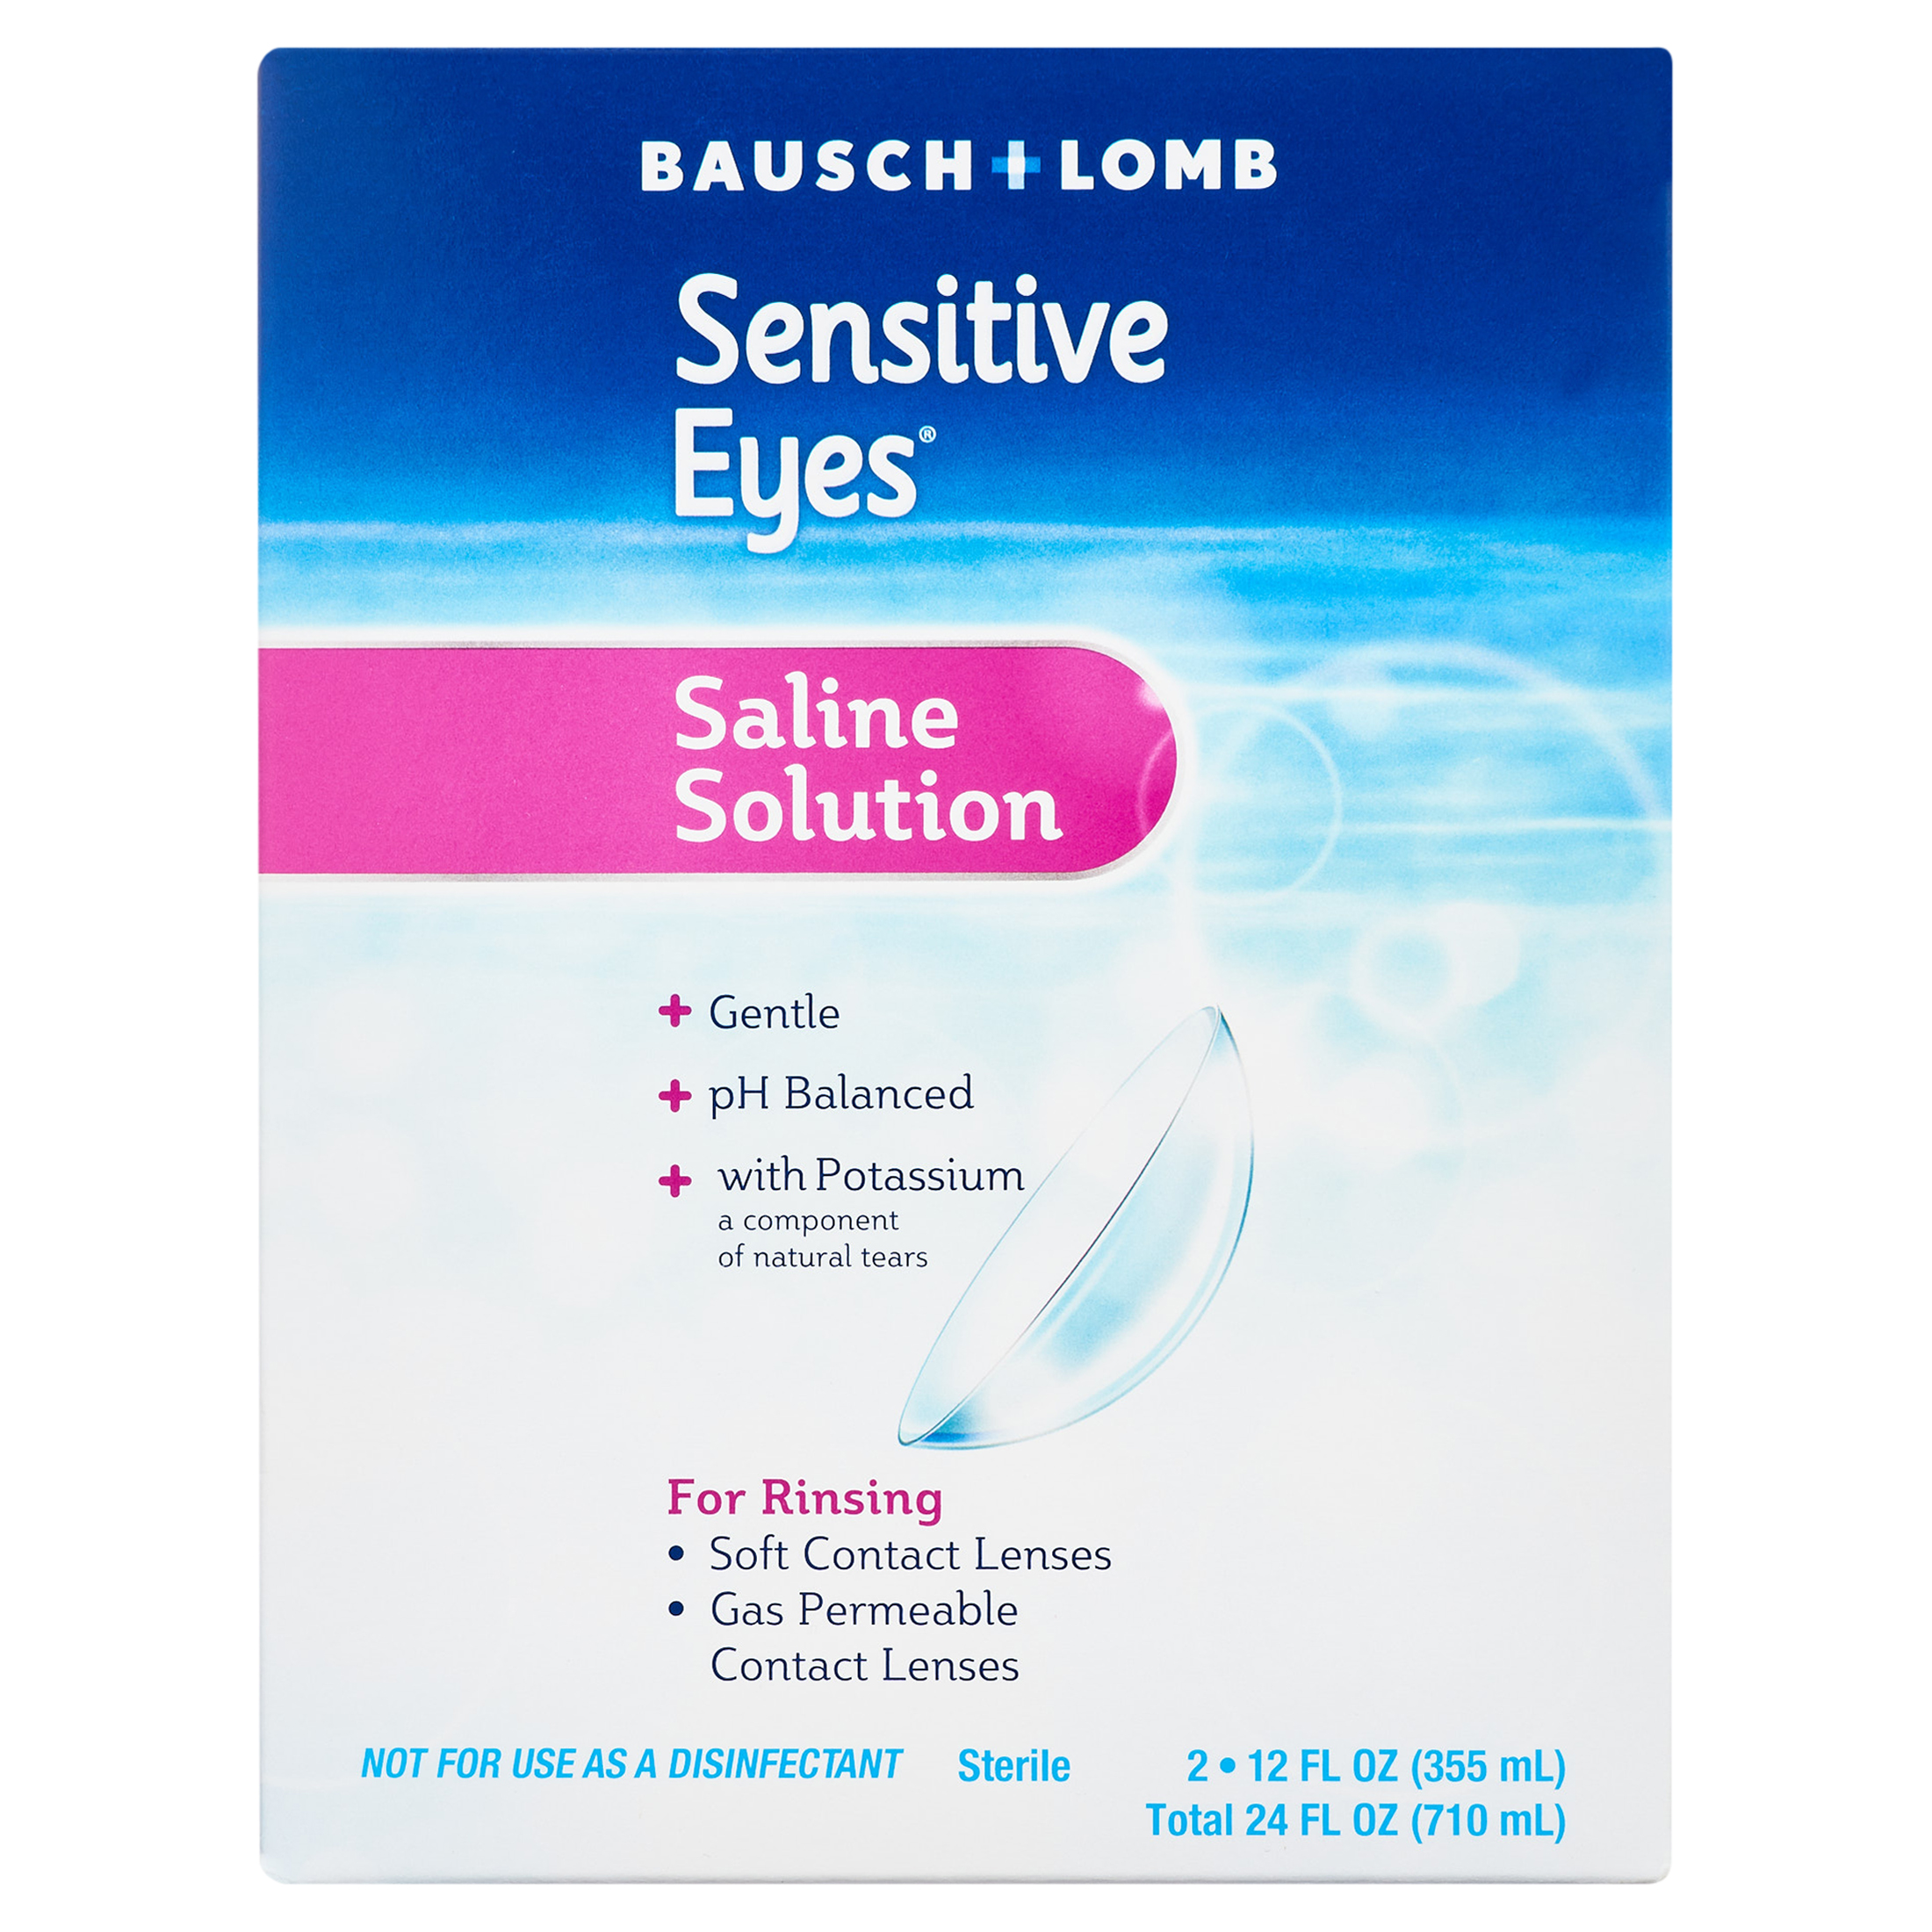 Sensitive Eyes® Plus Saline Solution 2 x 12 fl oz (355 mL) - image 5 of 8